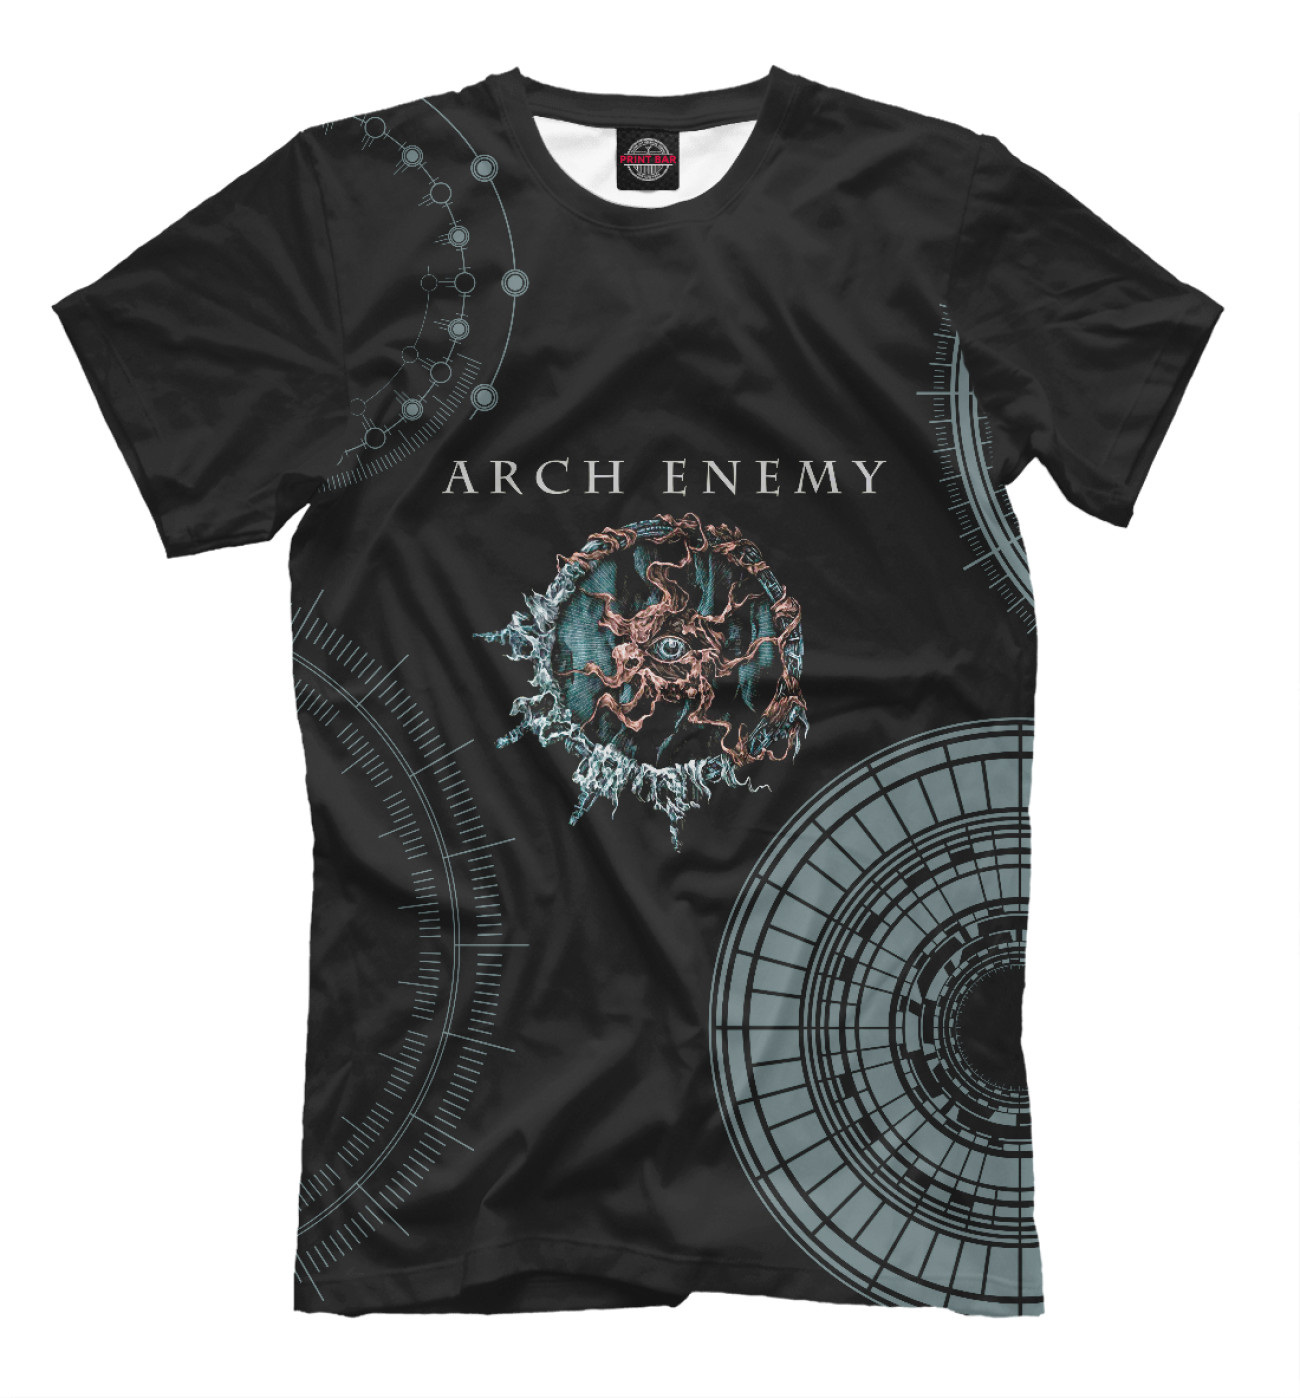 Мужская Футболка Arch Enemy, артикул: AEN-786291-fut-2